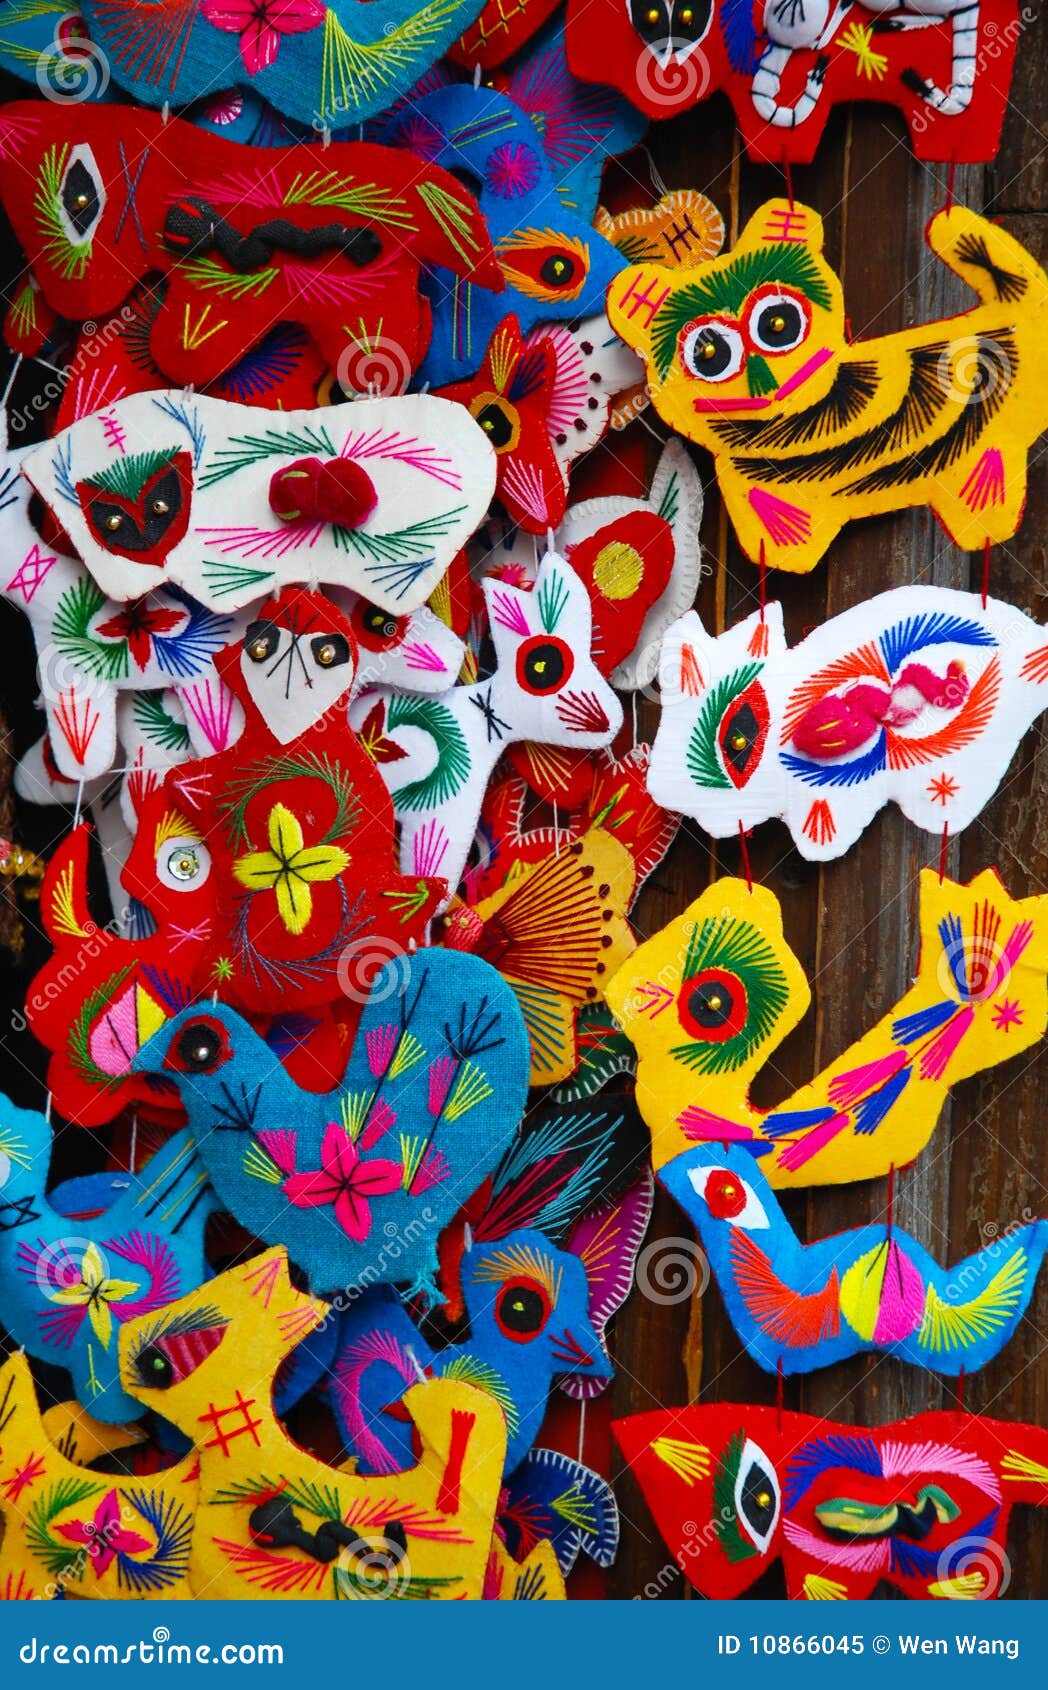 chinese handicrafts